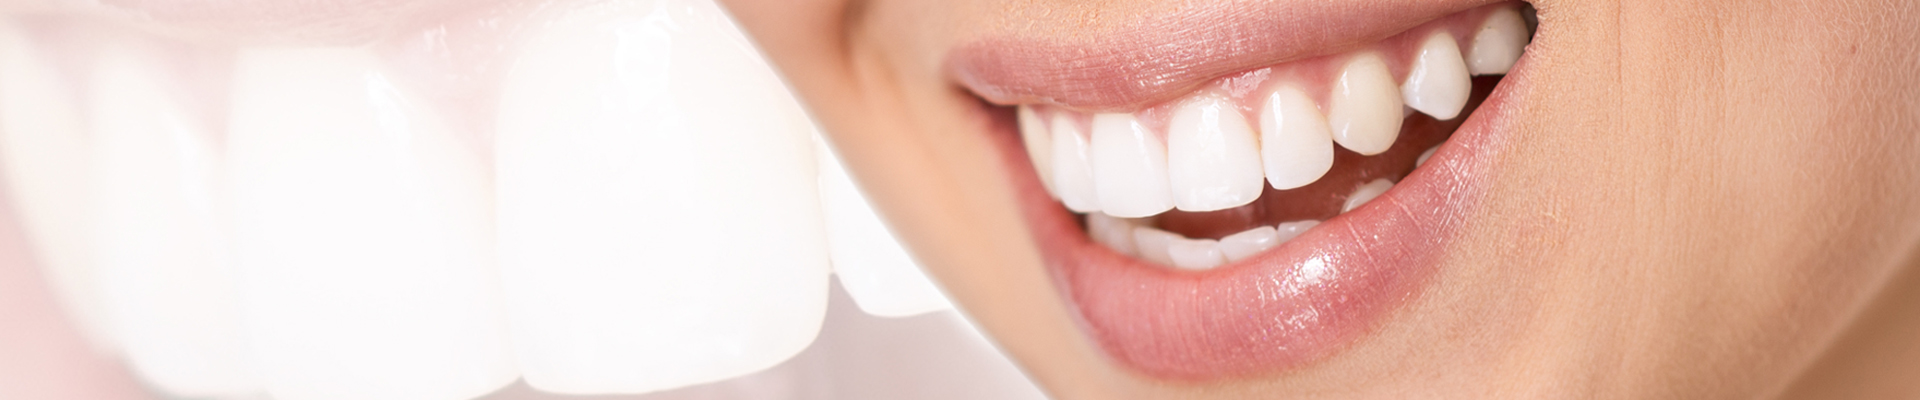 Types of Teeth Whitening Methods